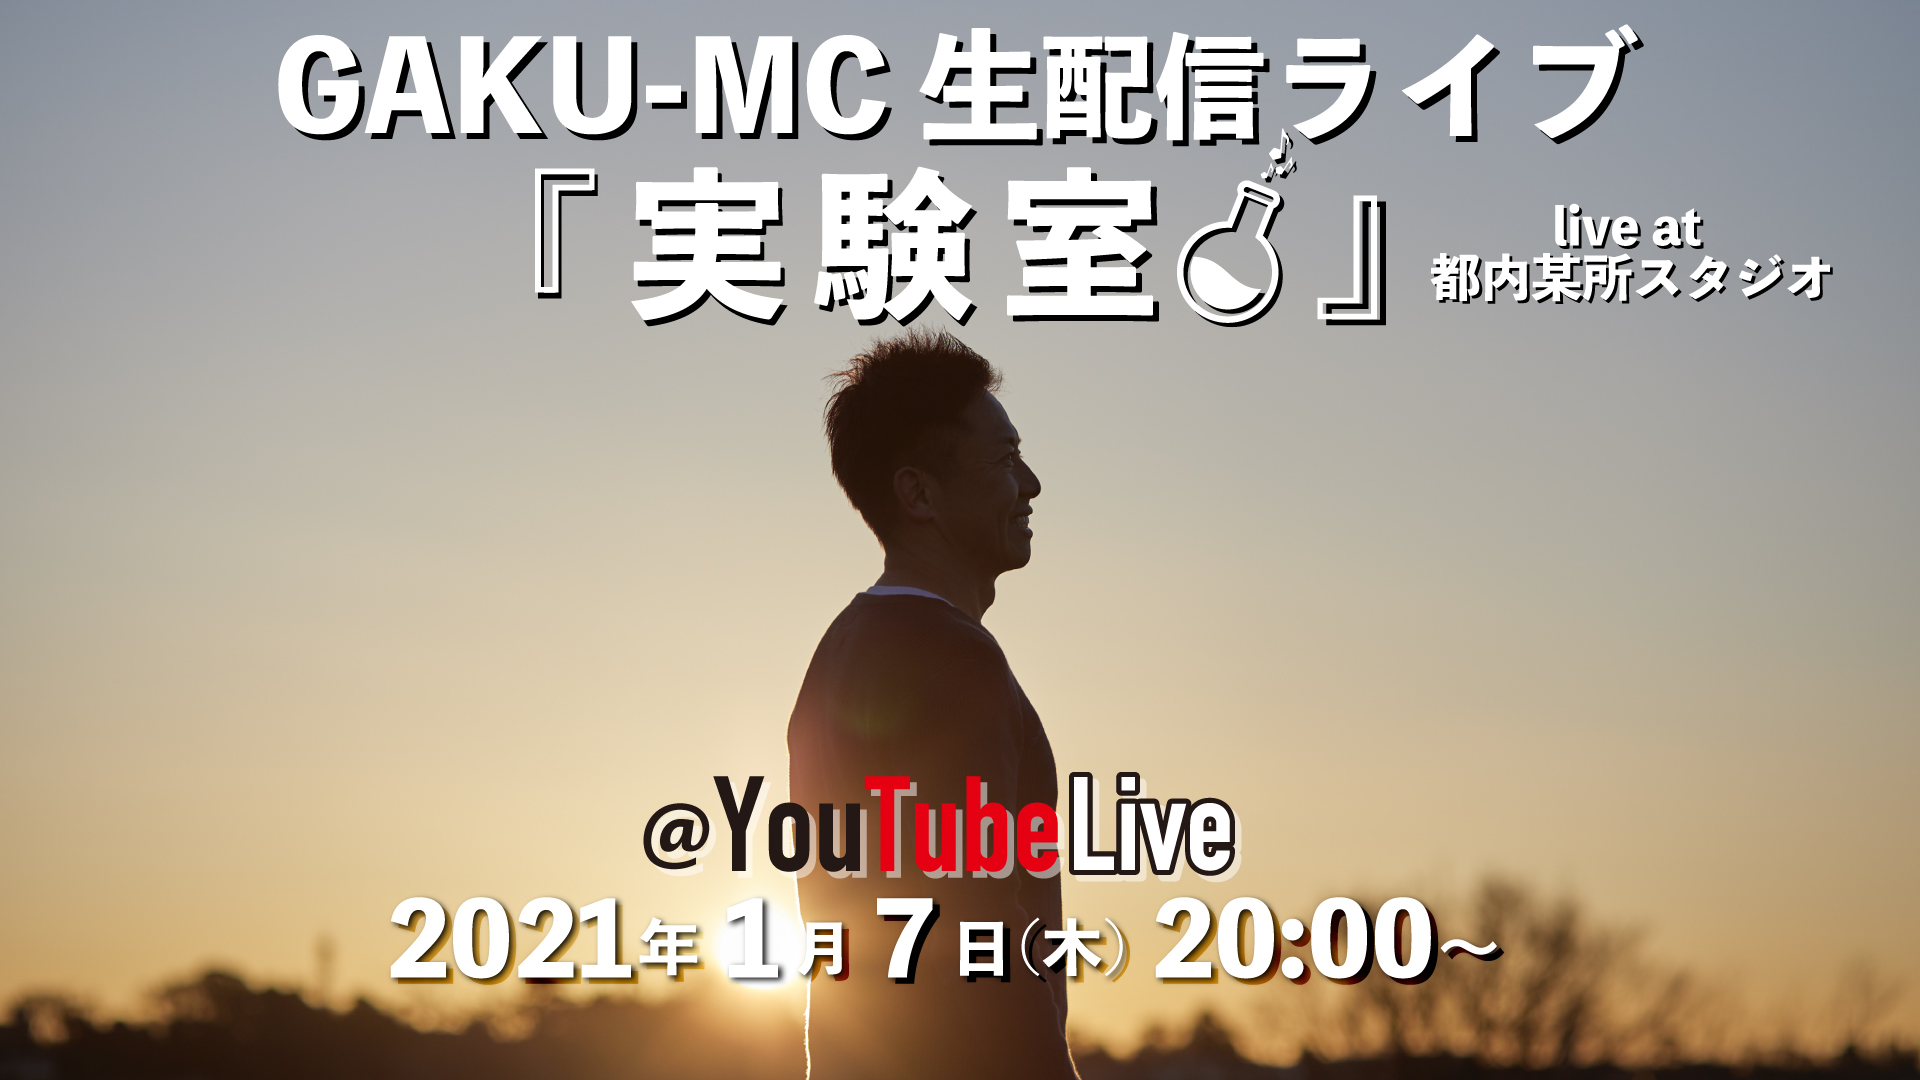 GAKU-MC  #Live始め 2021 『実験室』 live at 都内某所スタジオ